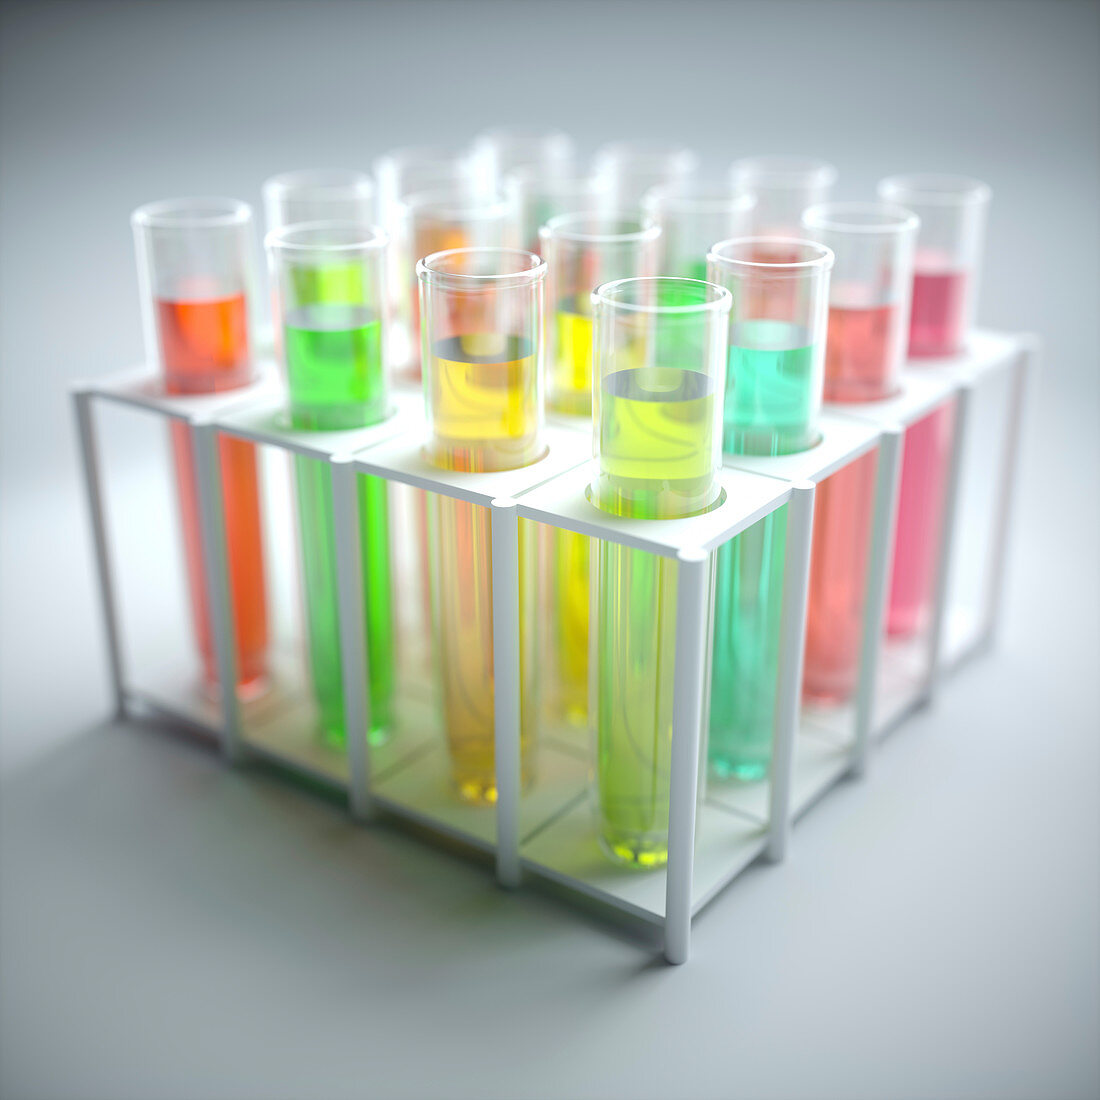 Test tubes with coloured liquids, illustration